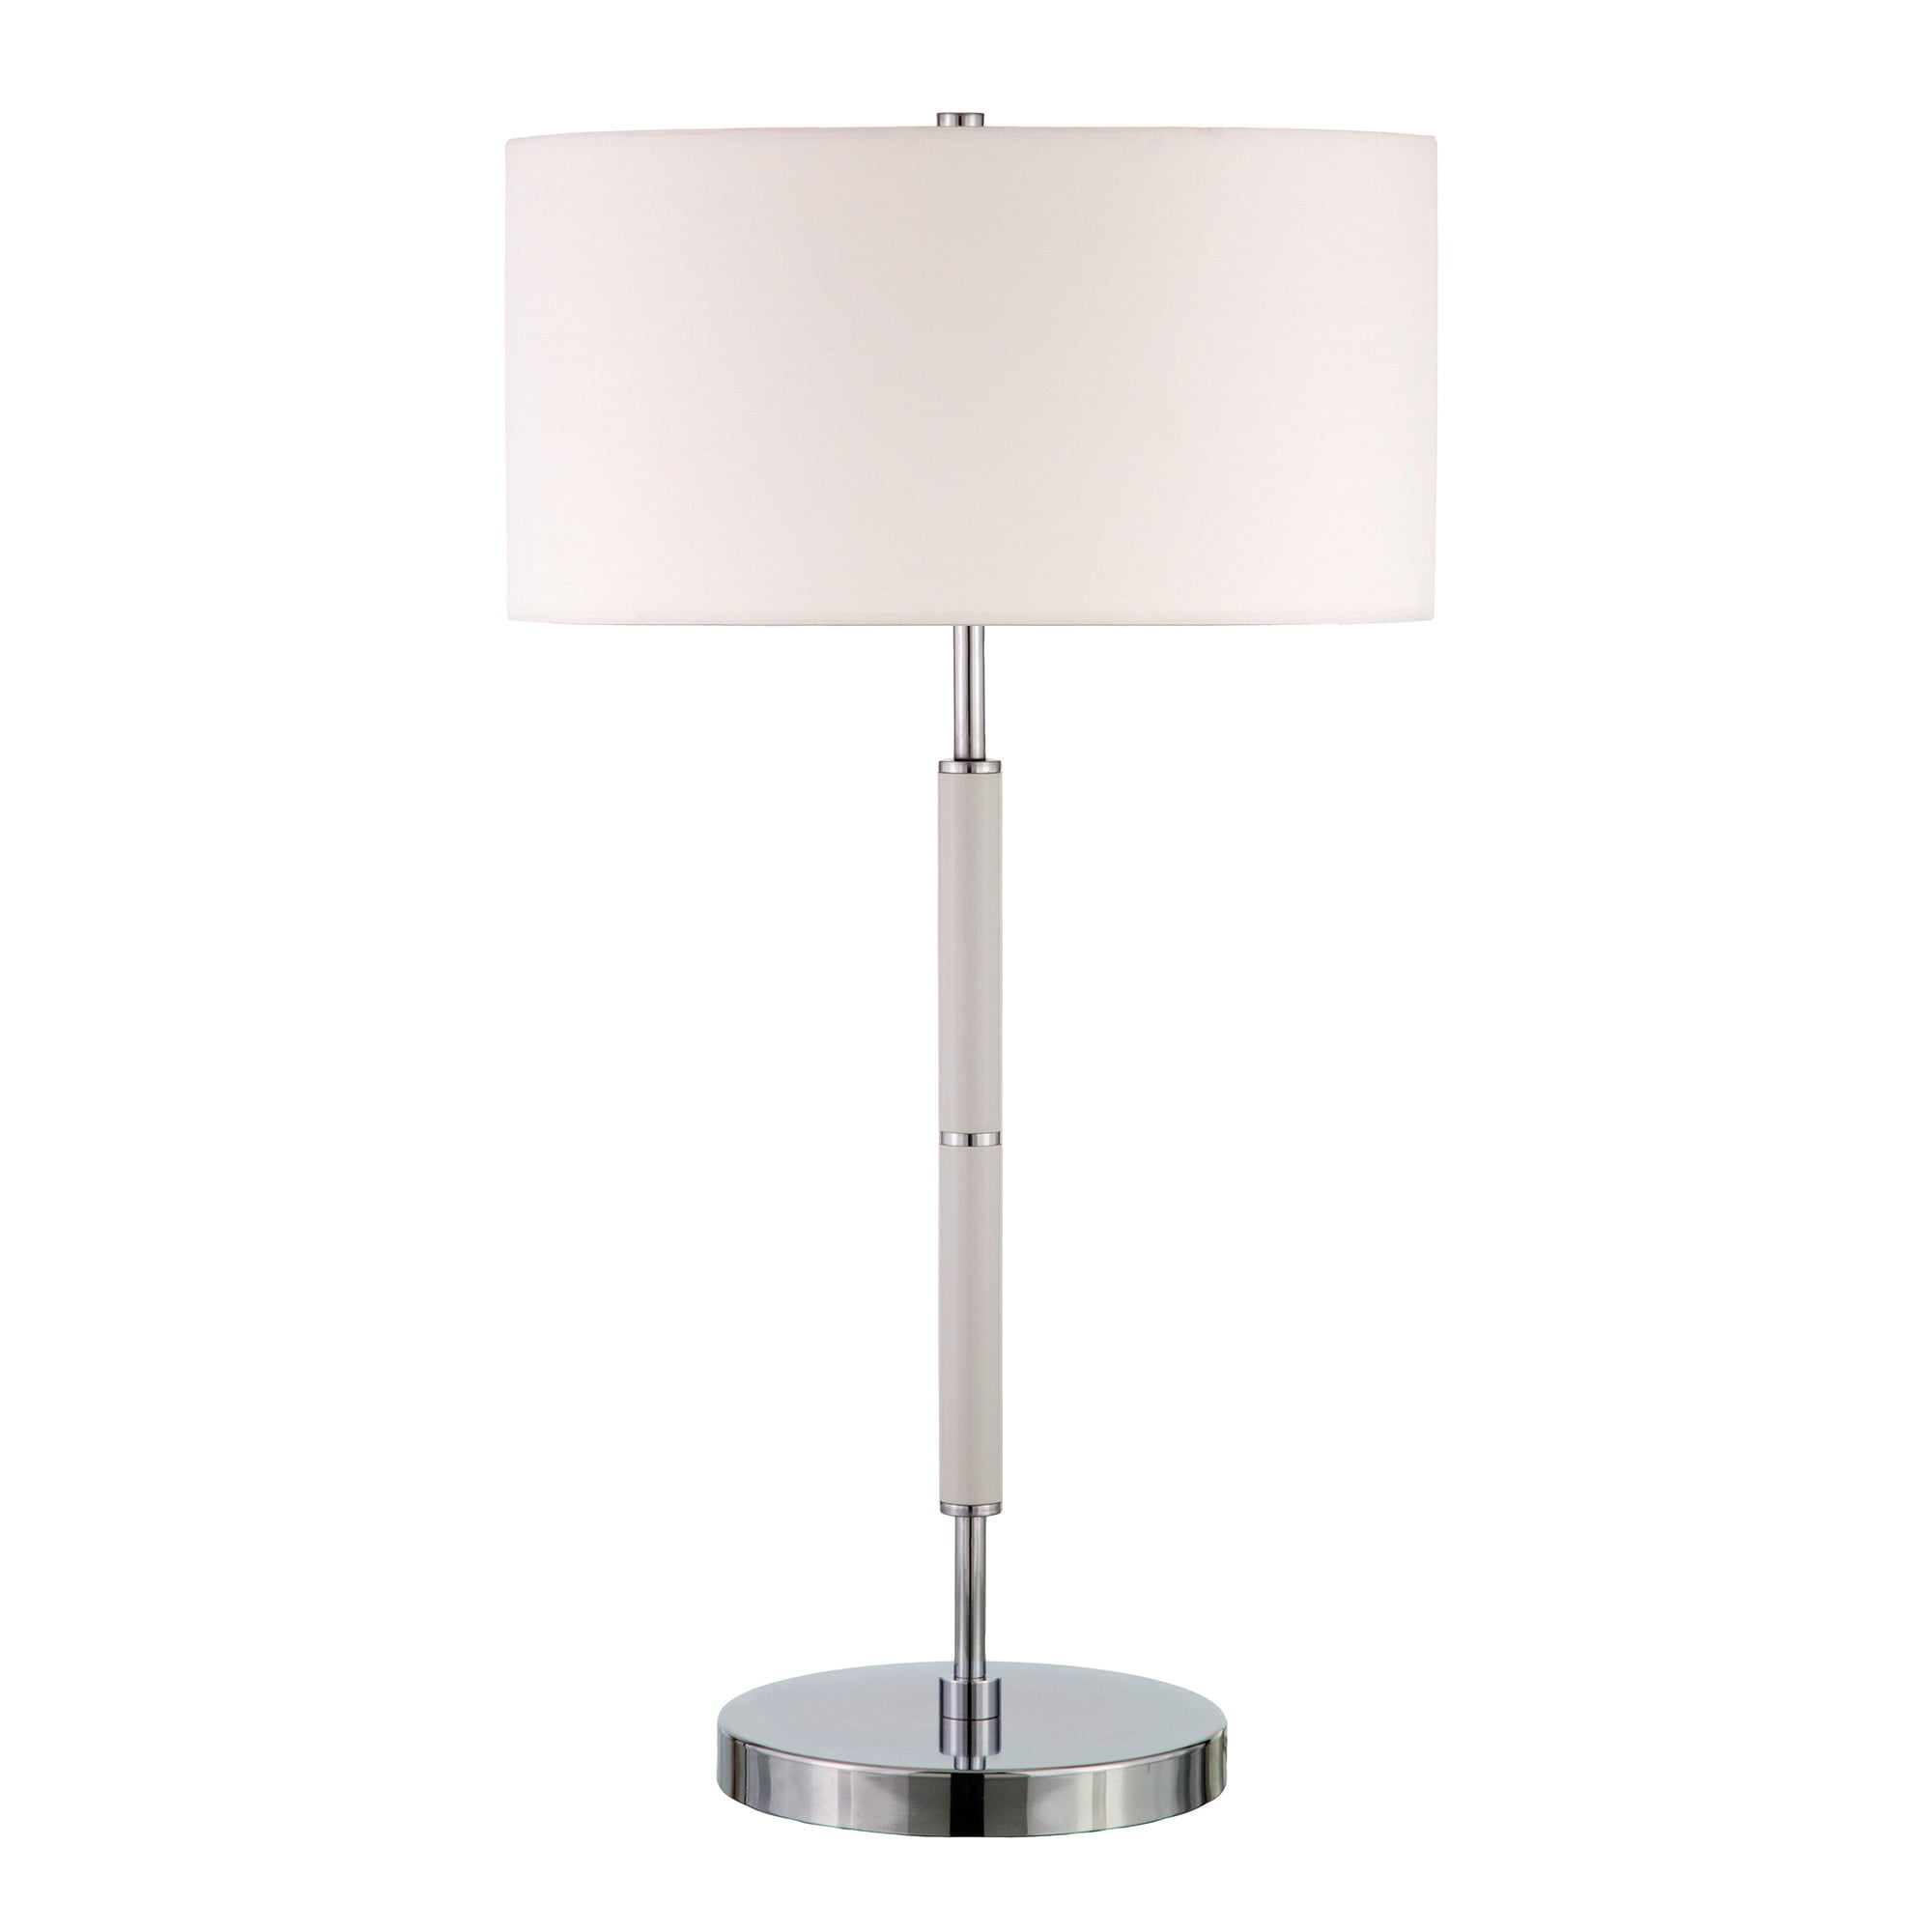 Modern Designer Style Dark Grey Curved Stem Floor Lamp with a Black Cylinder Light Shade